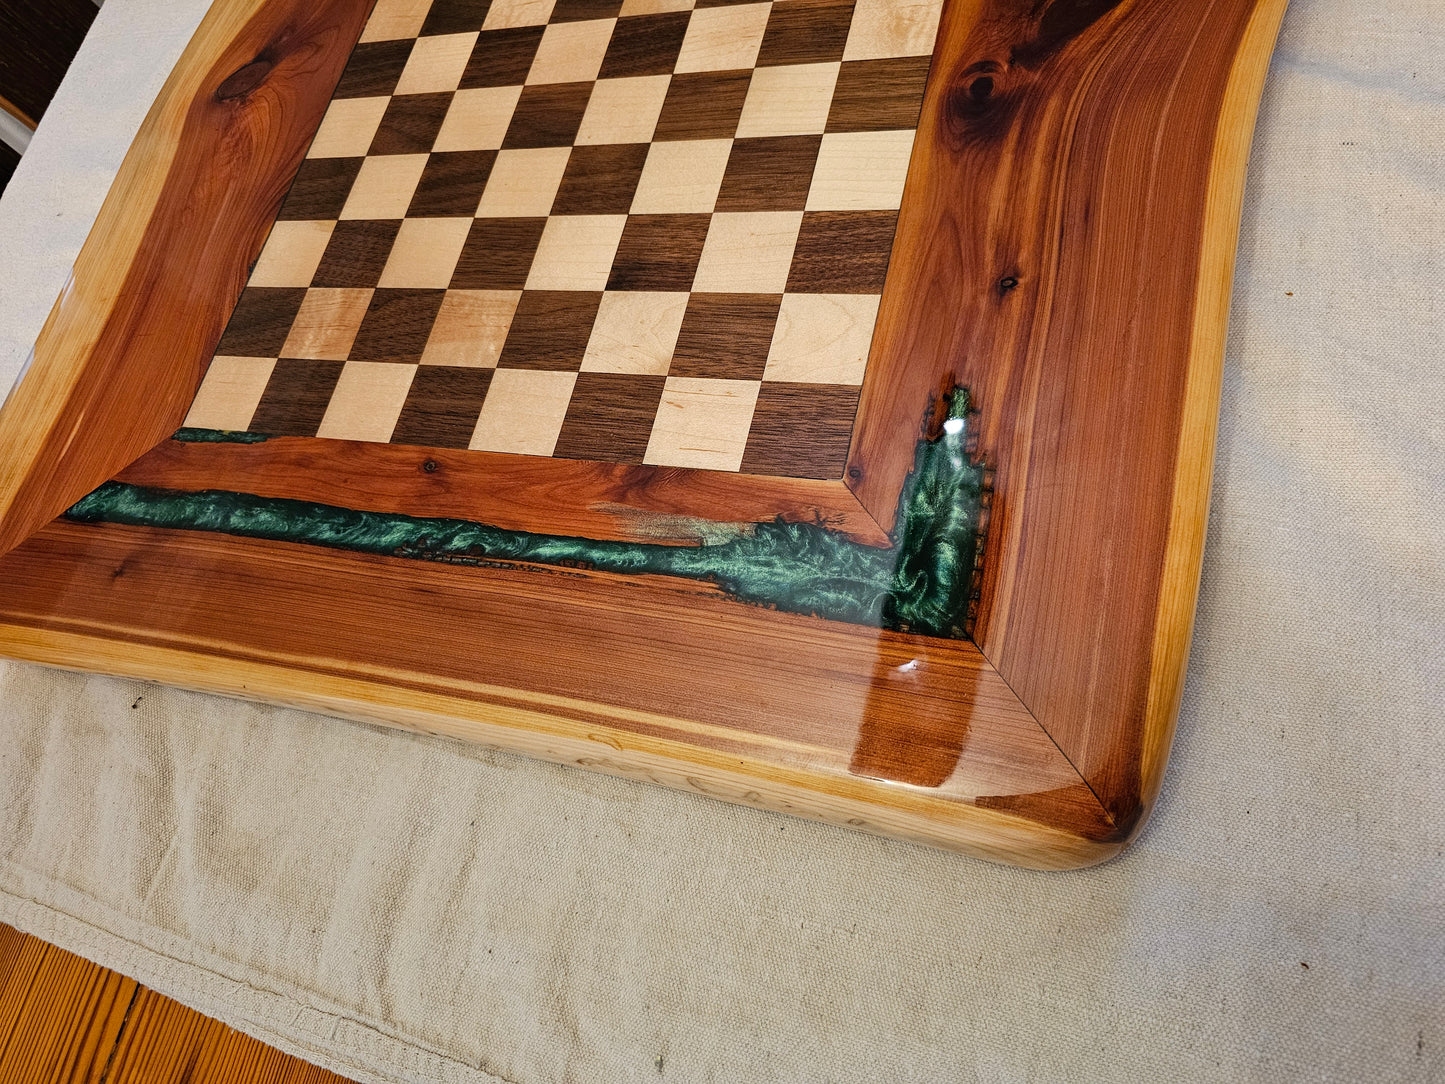 Cedar Epoxy Chess Board